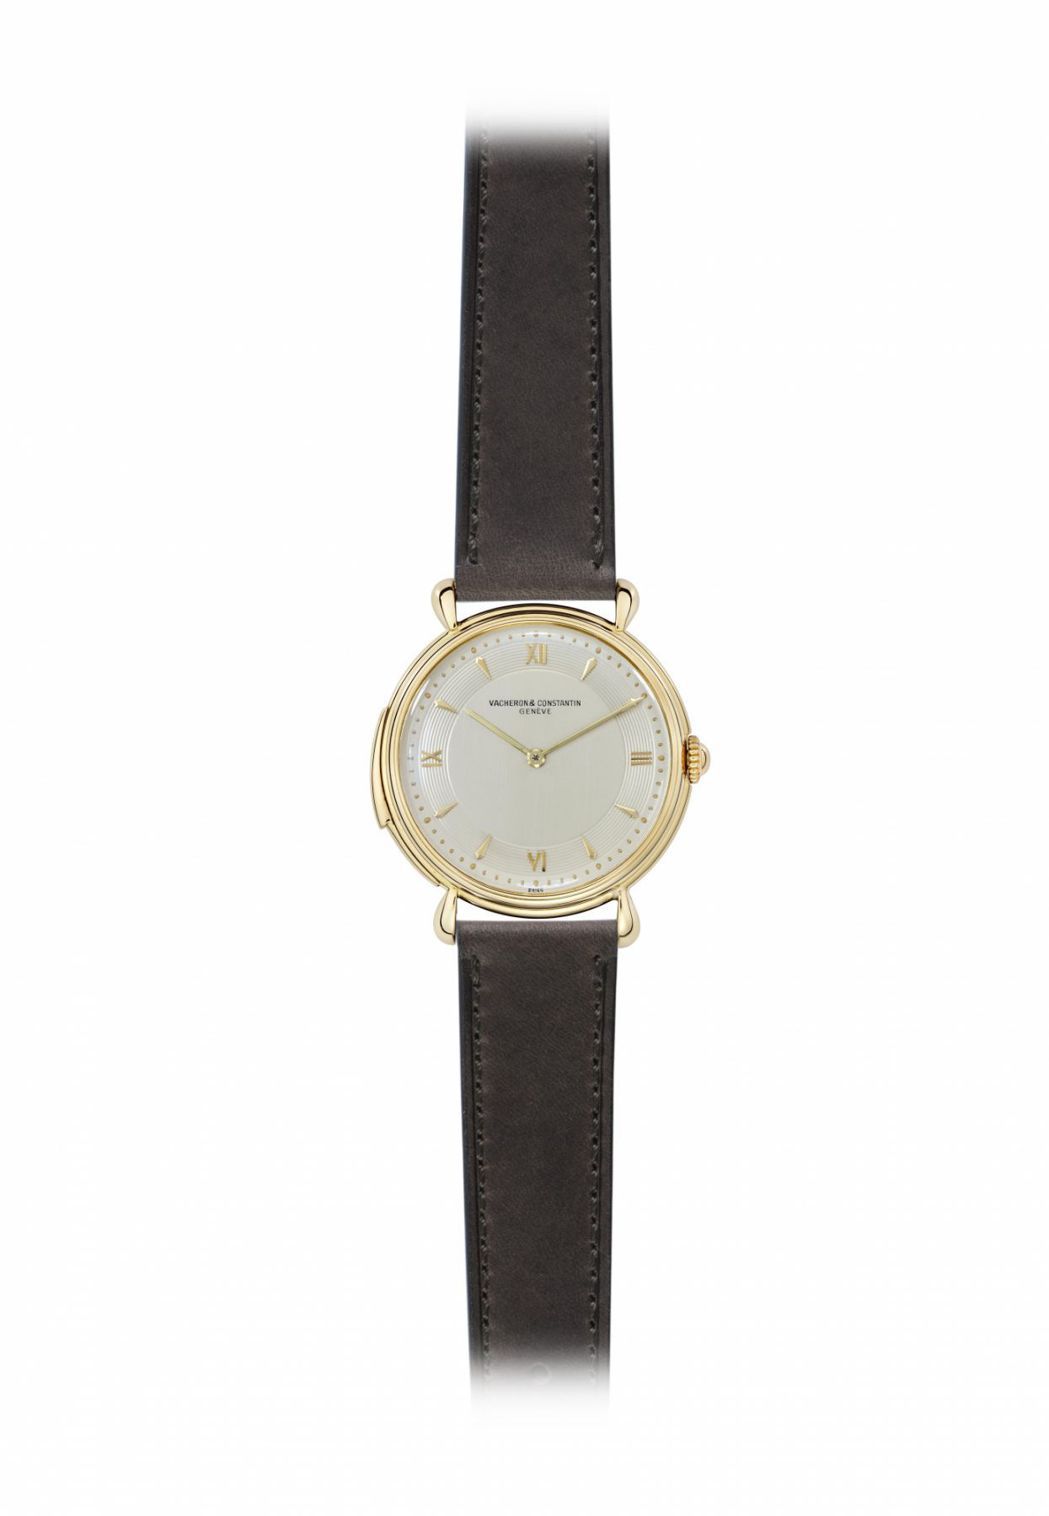 18K黃金超薄三問腕錶 ref.11761(1951）。圖片來源/Vachero...